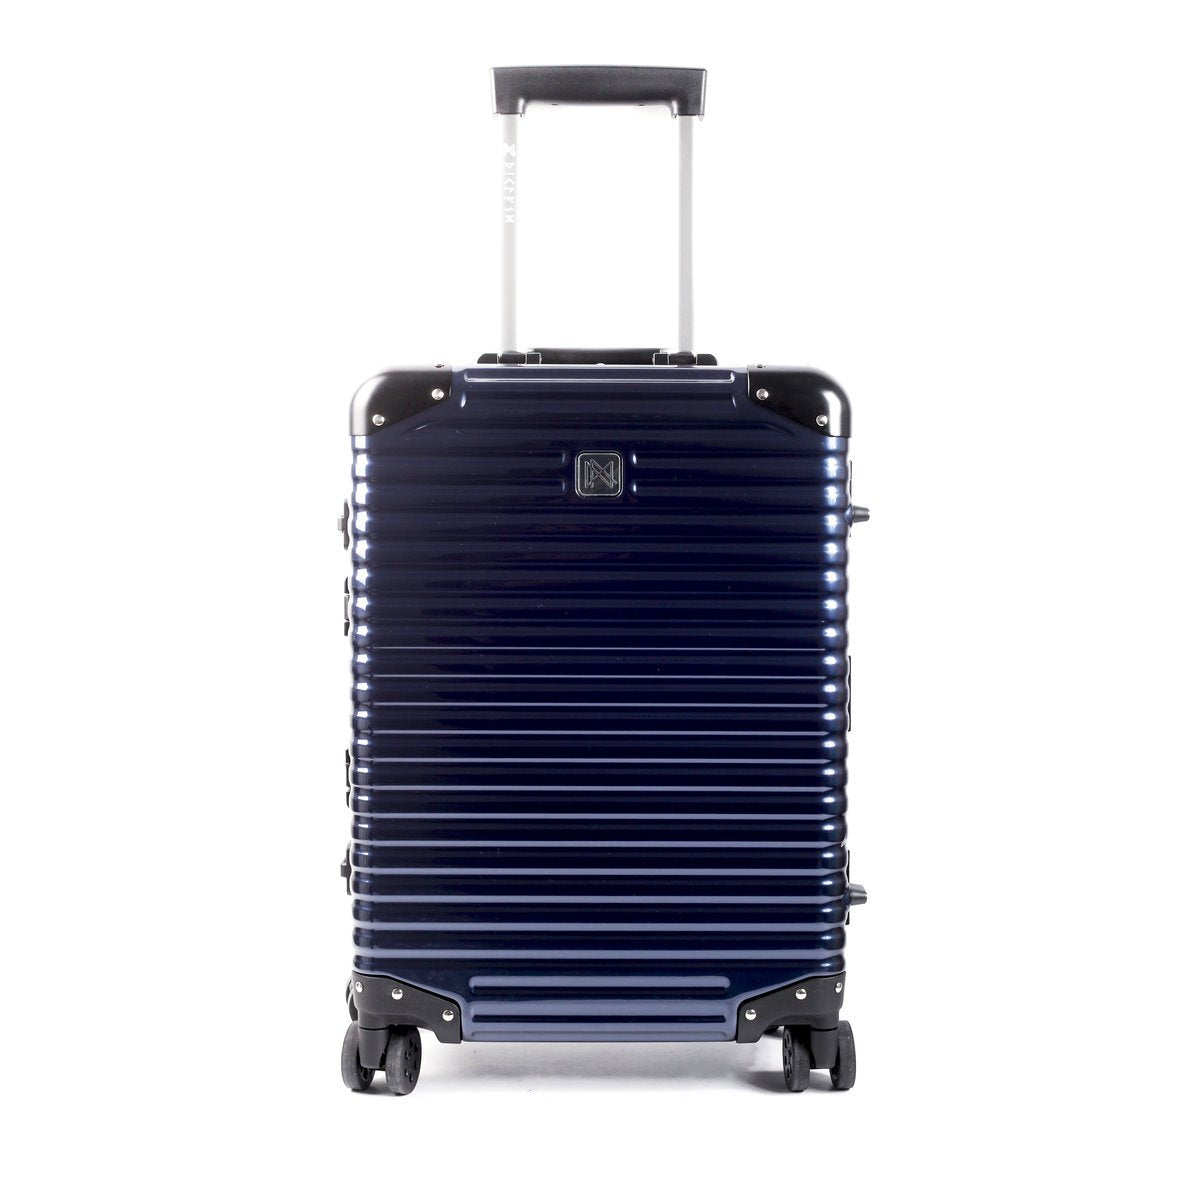 Lanzzo Norman Light (Mazarine Blue) 42912.29 Lanzzo 諾曼輕型系列瑪莎藍29吋旅行行李箱 42912.29